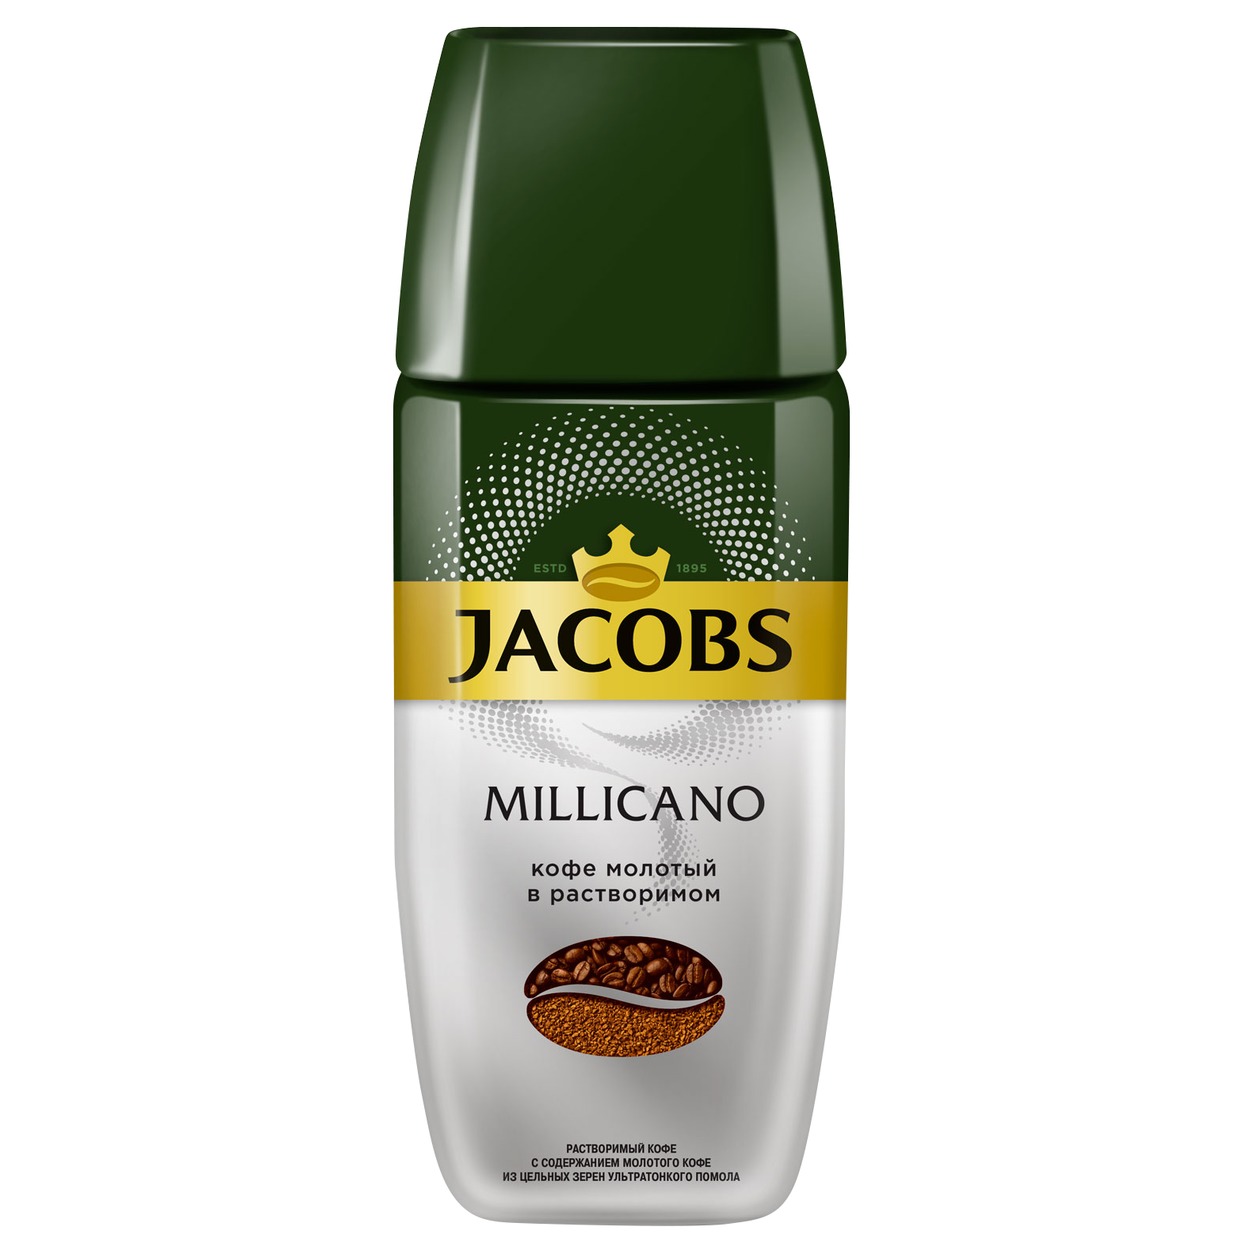 Кофе Jacobs Millicano, растворимый, 95 г